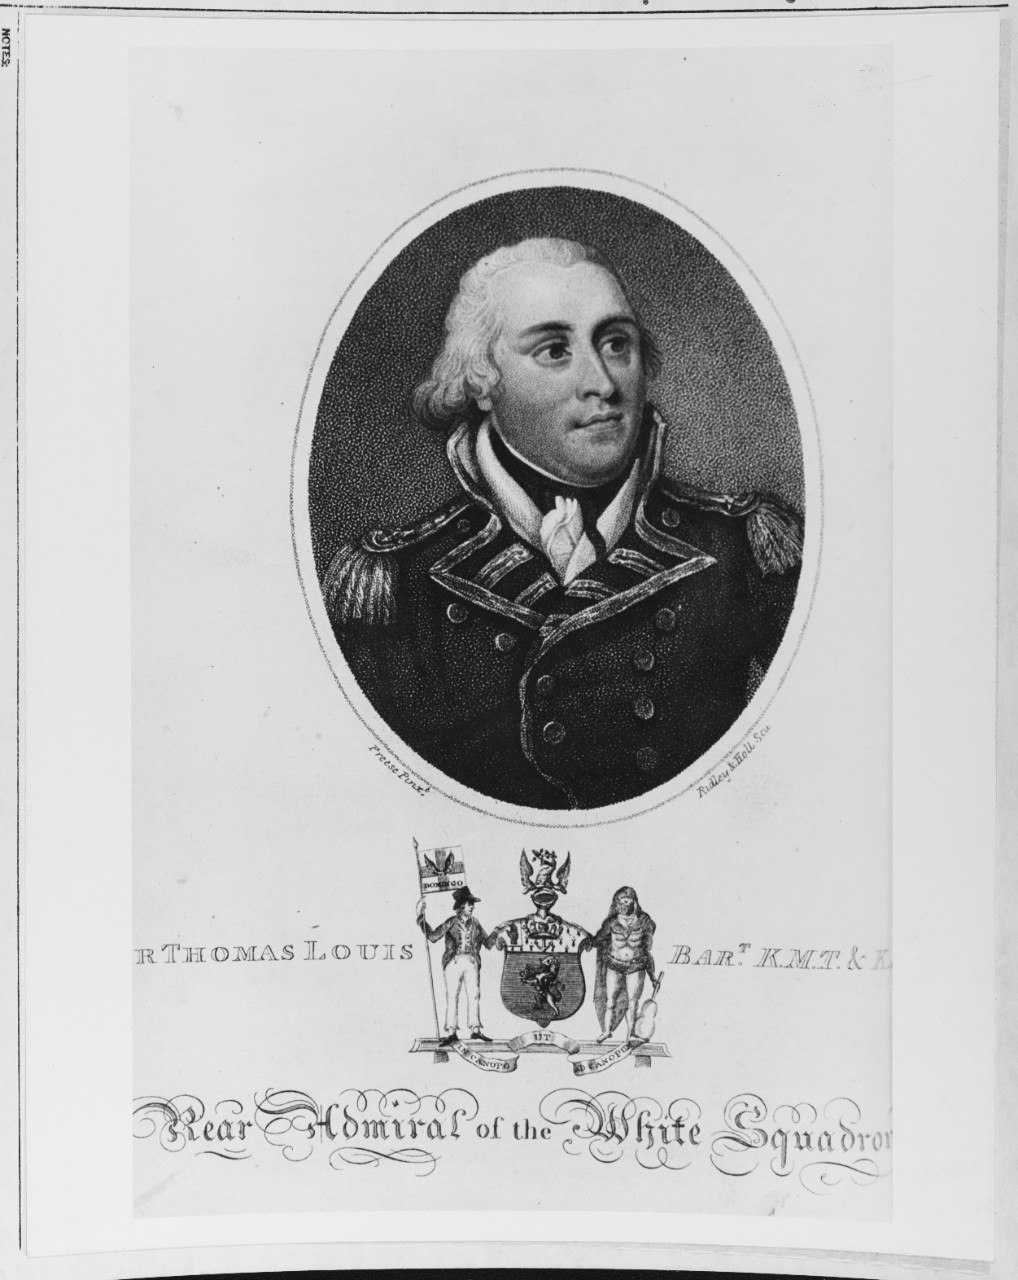 Sir Thomas Louis ( 1759 - 1807), English Rear Admiral